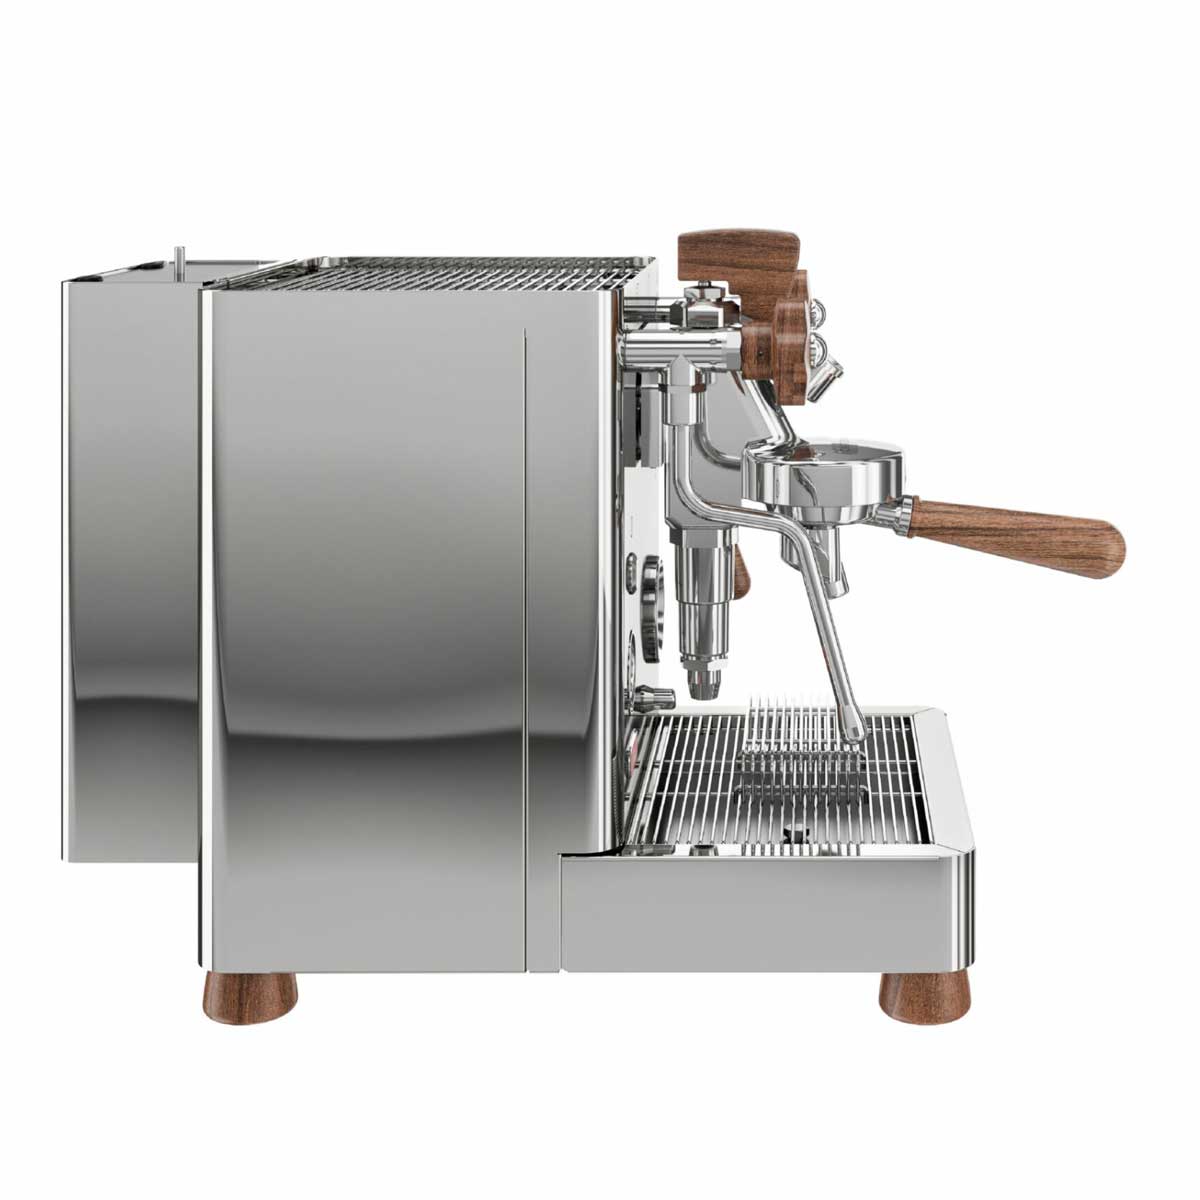 Lelit Bianca V3 PID Dual Boiler Espresso Machine